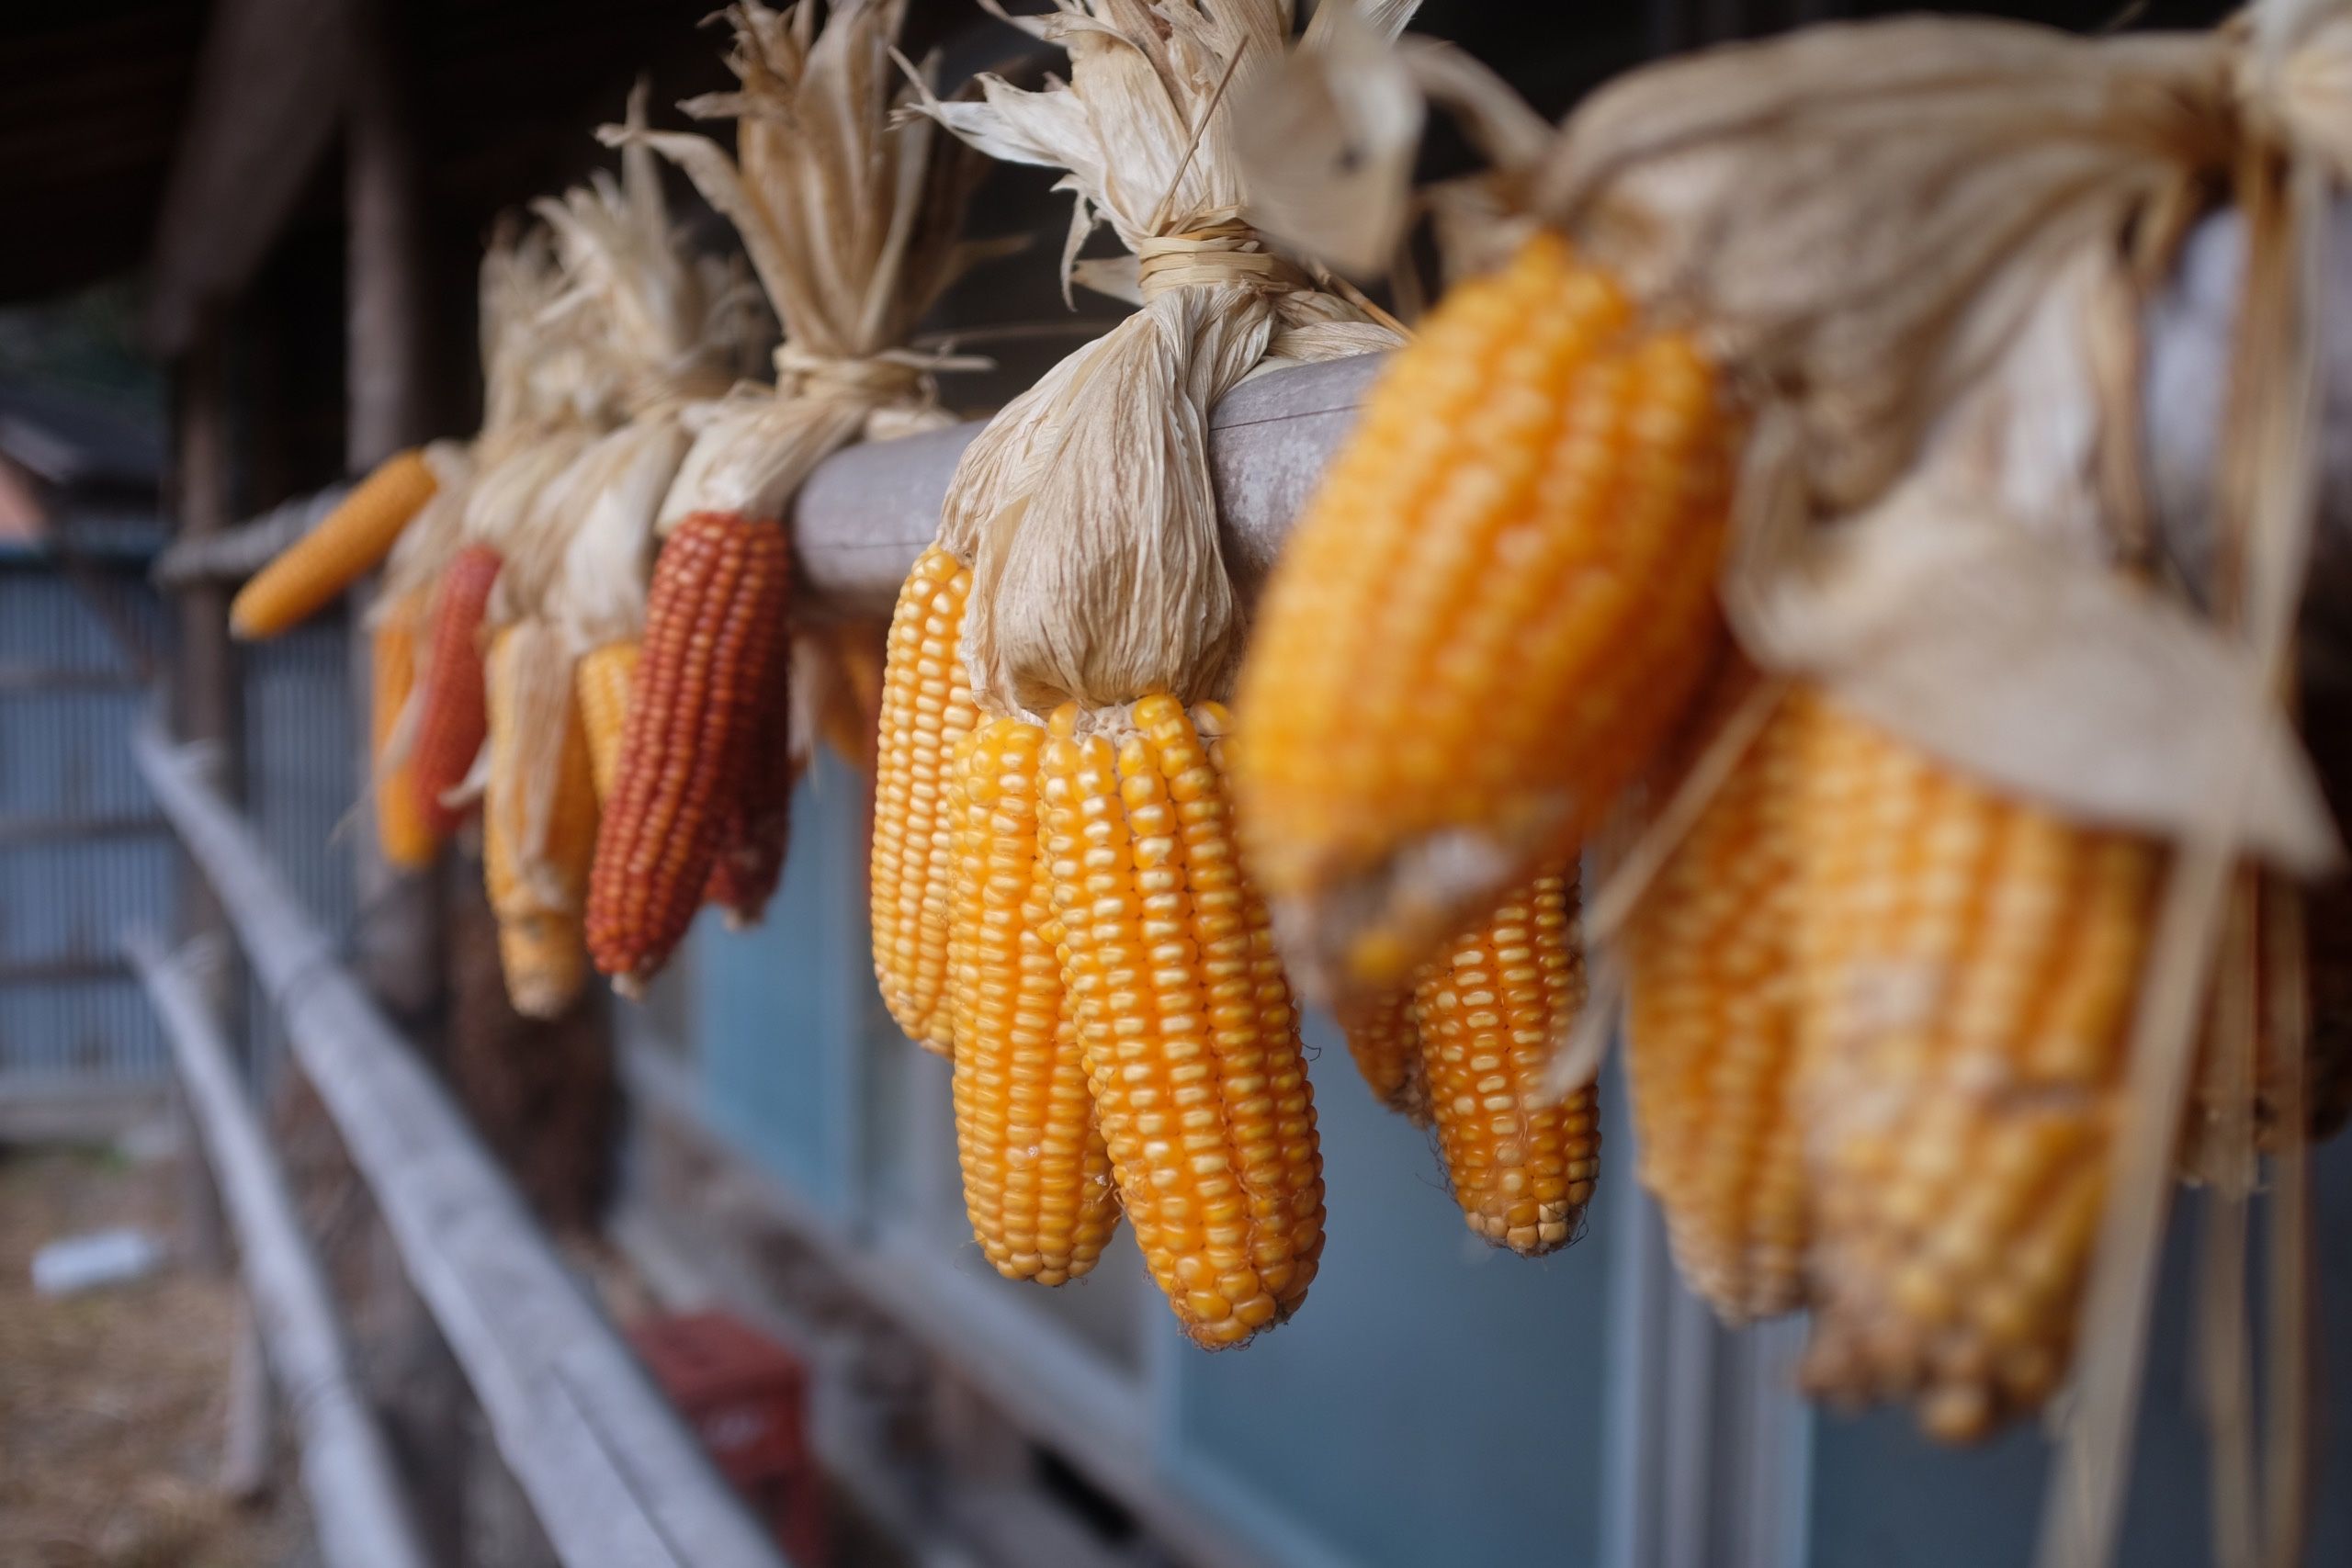 Ears of corn drying on a rack.